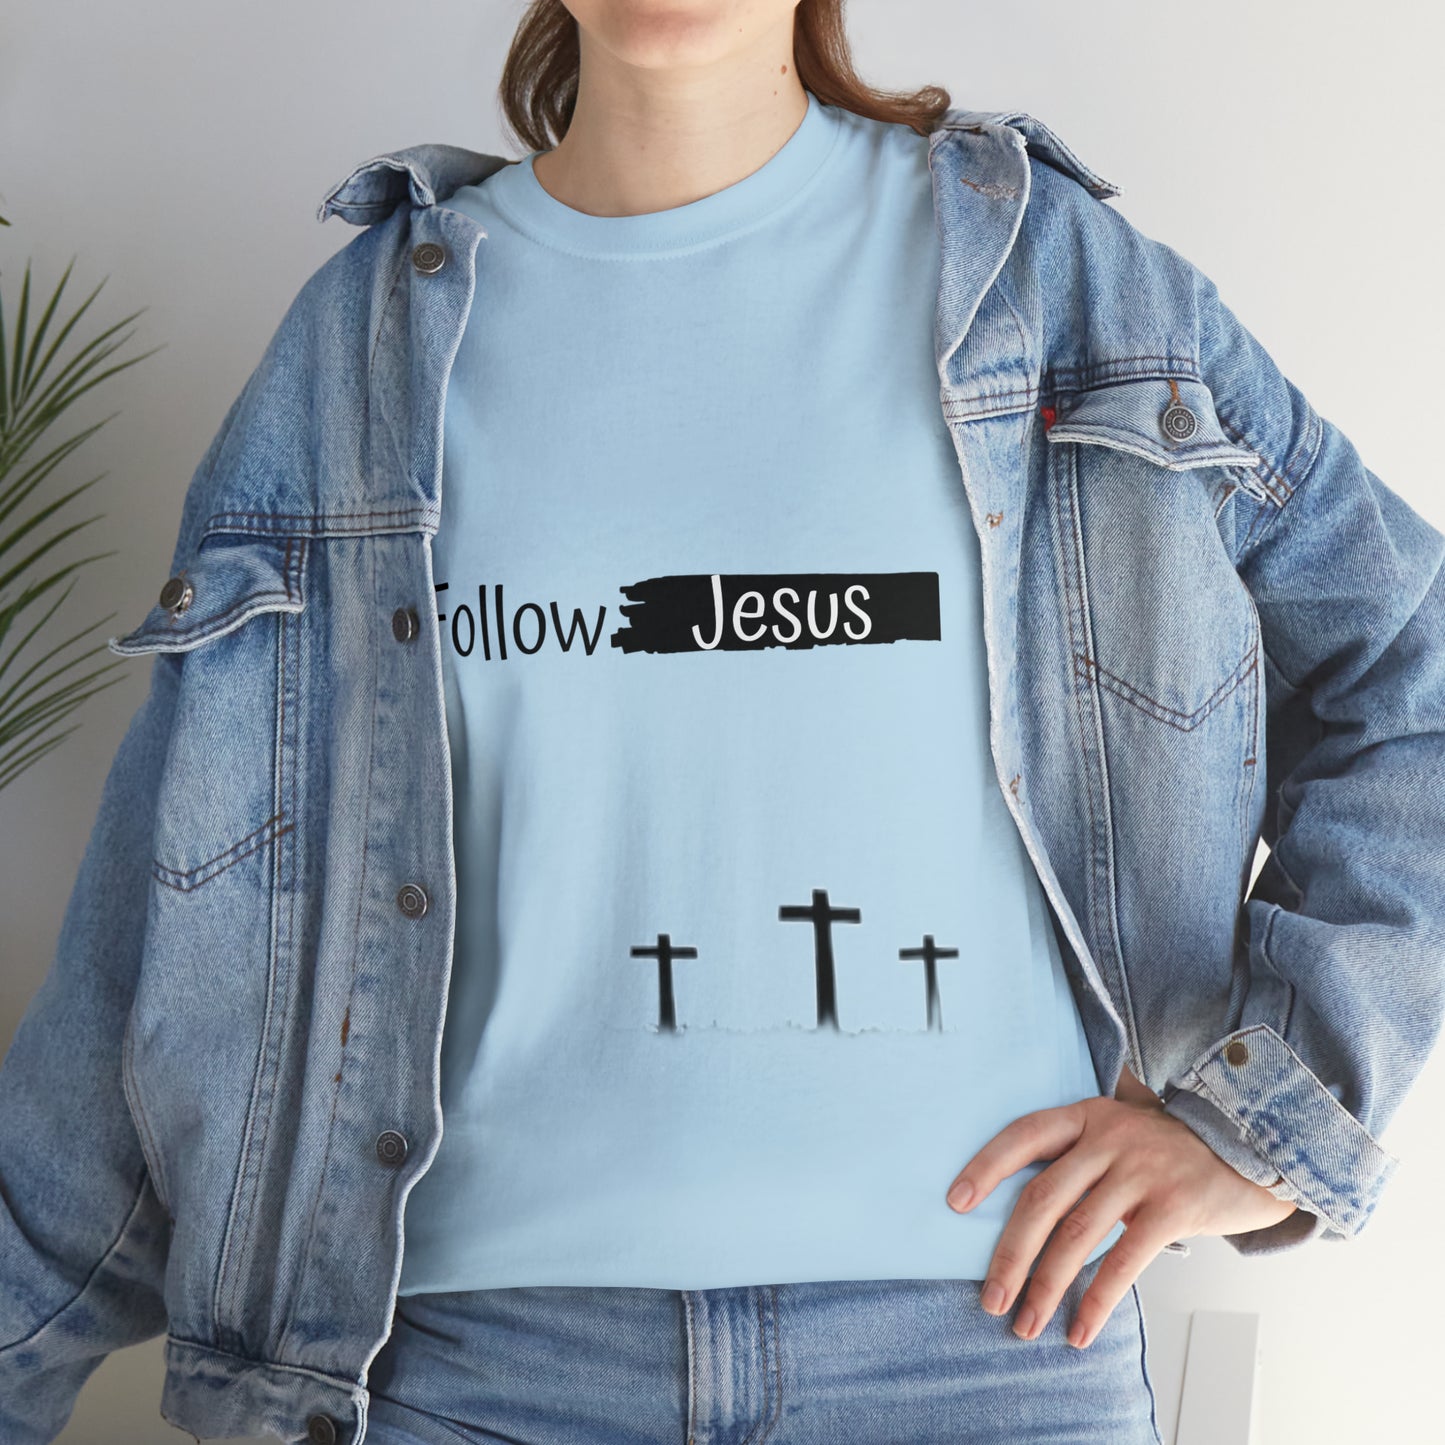 Follow Jesus01 Christian tshirt - Unisex Heavy Cotton Tee